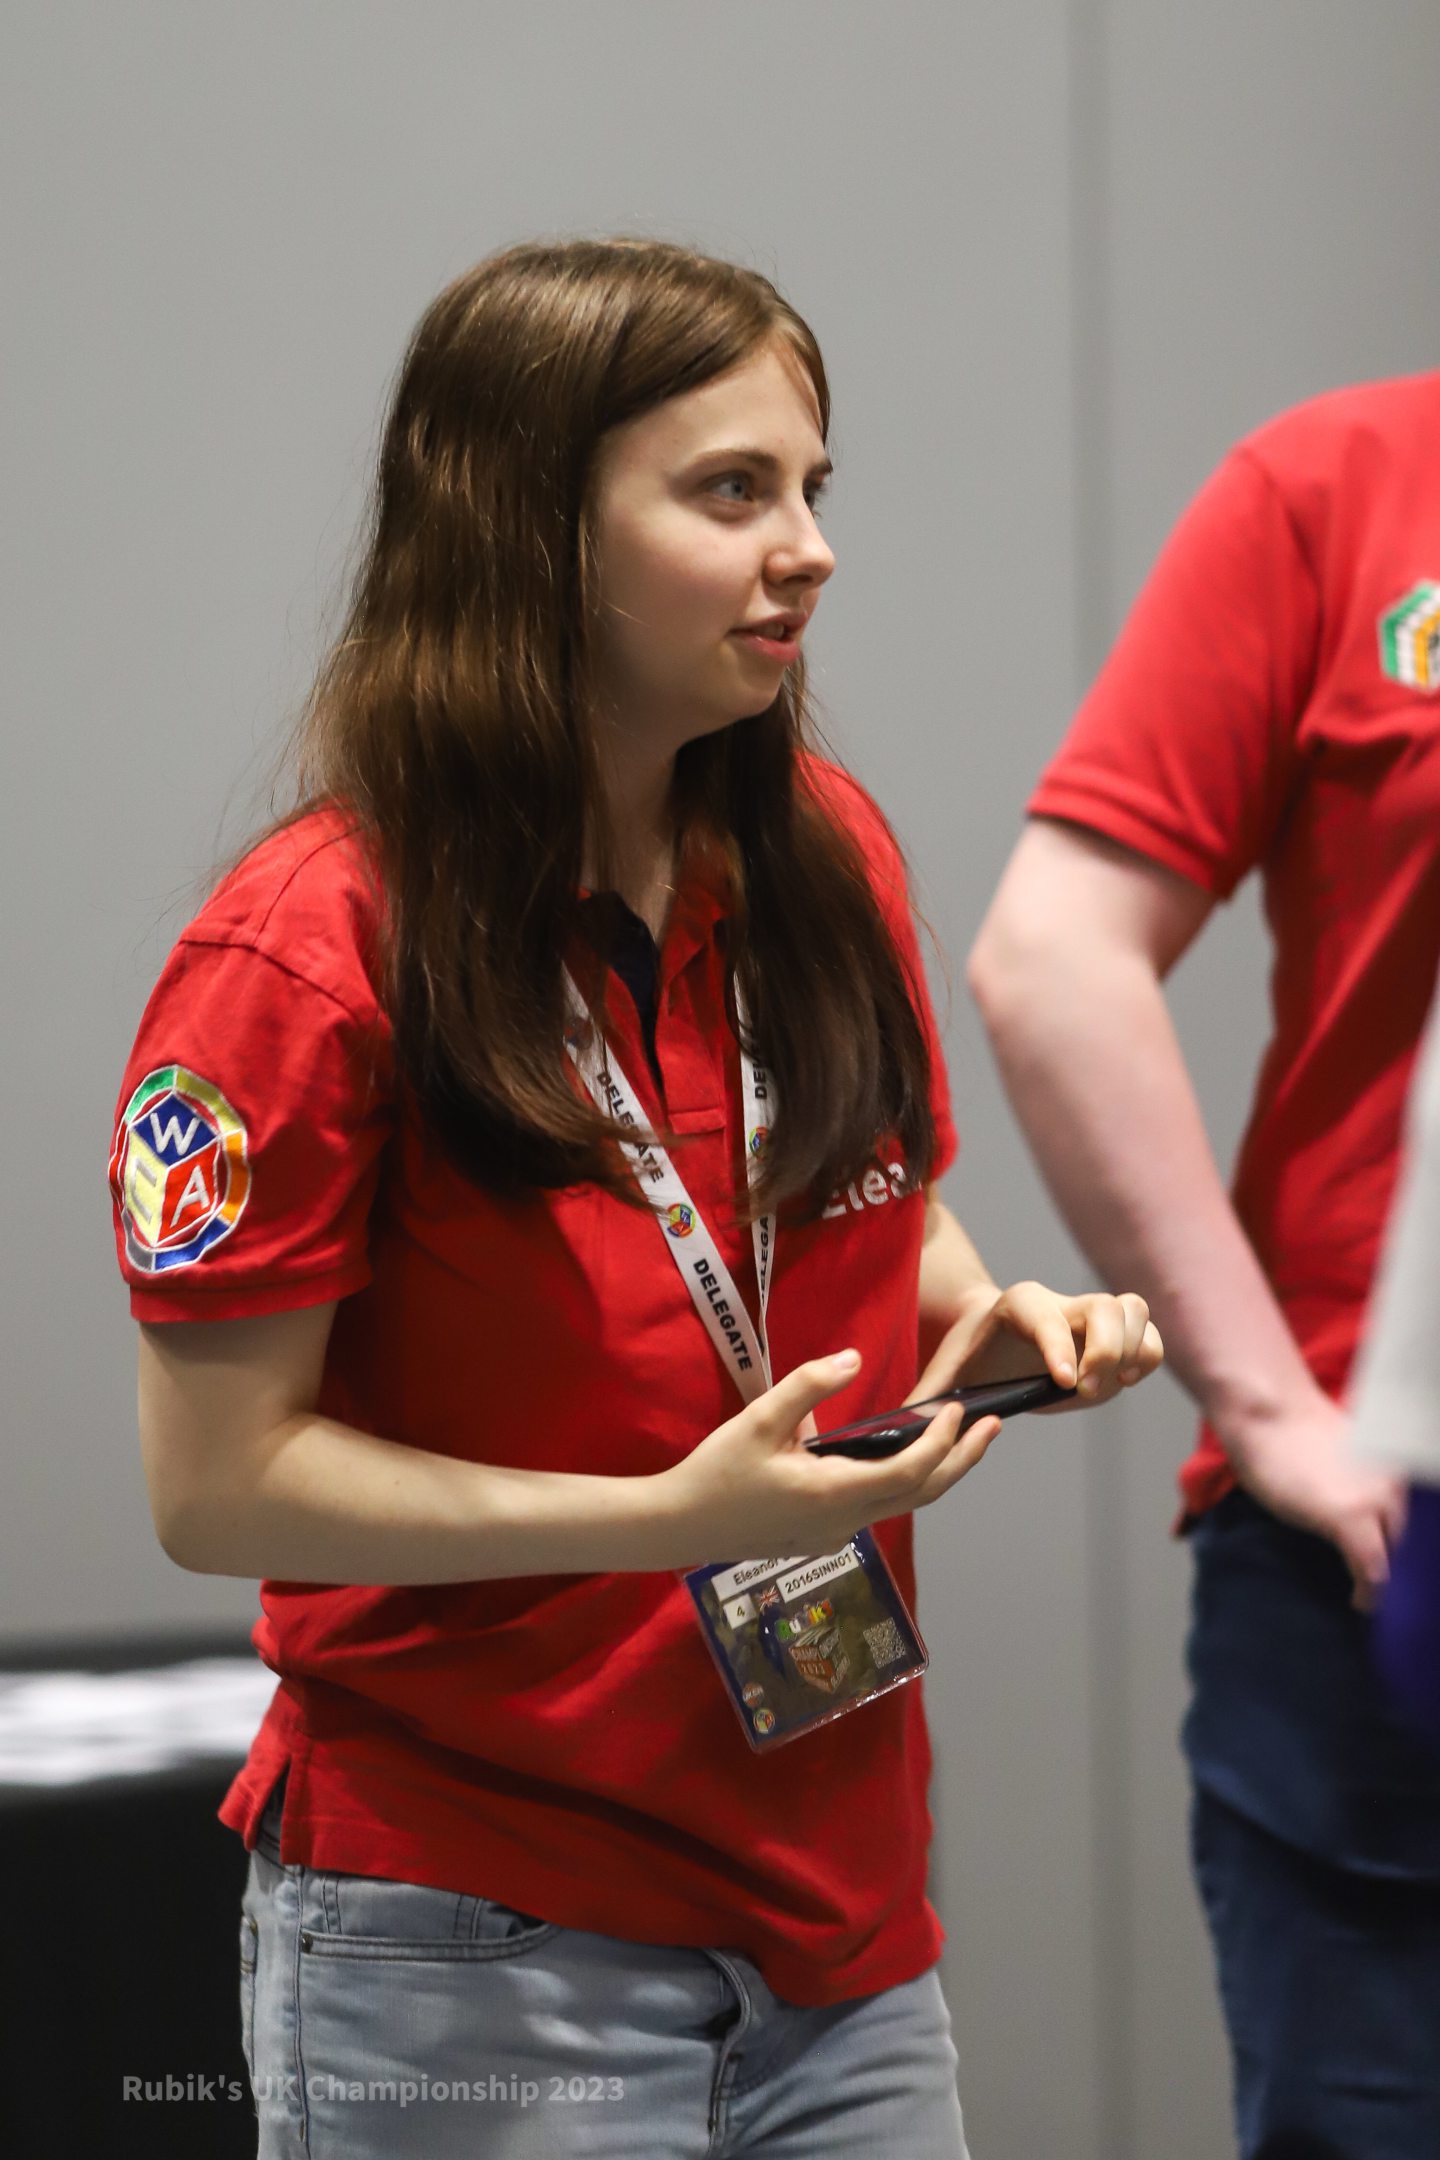 Eleanor Sinnott in a red shirt at a WCA event. 